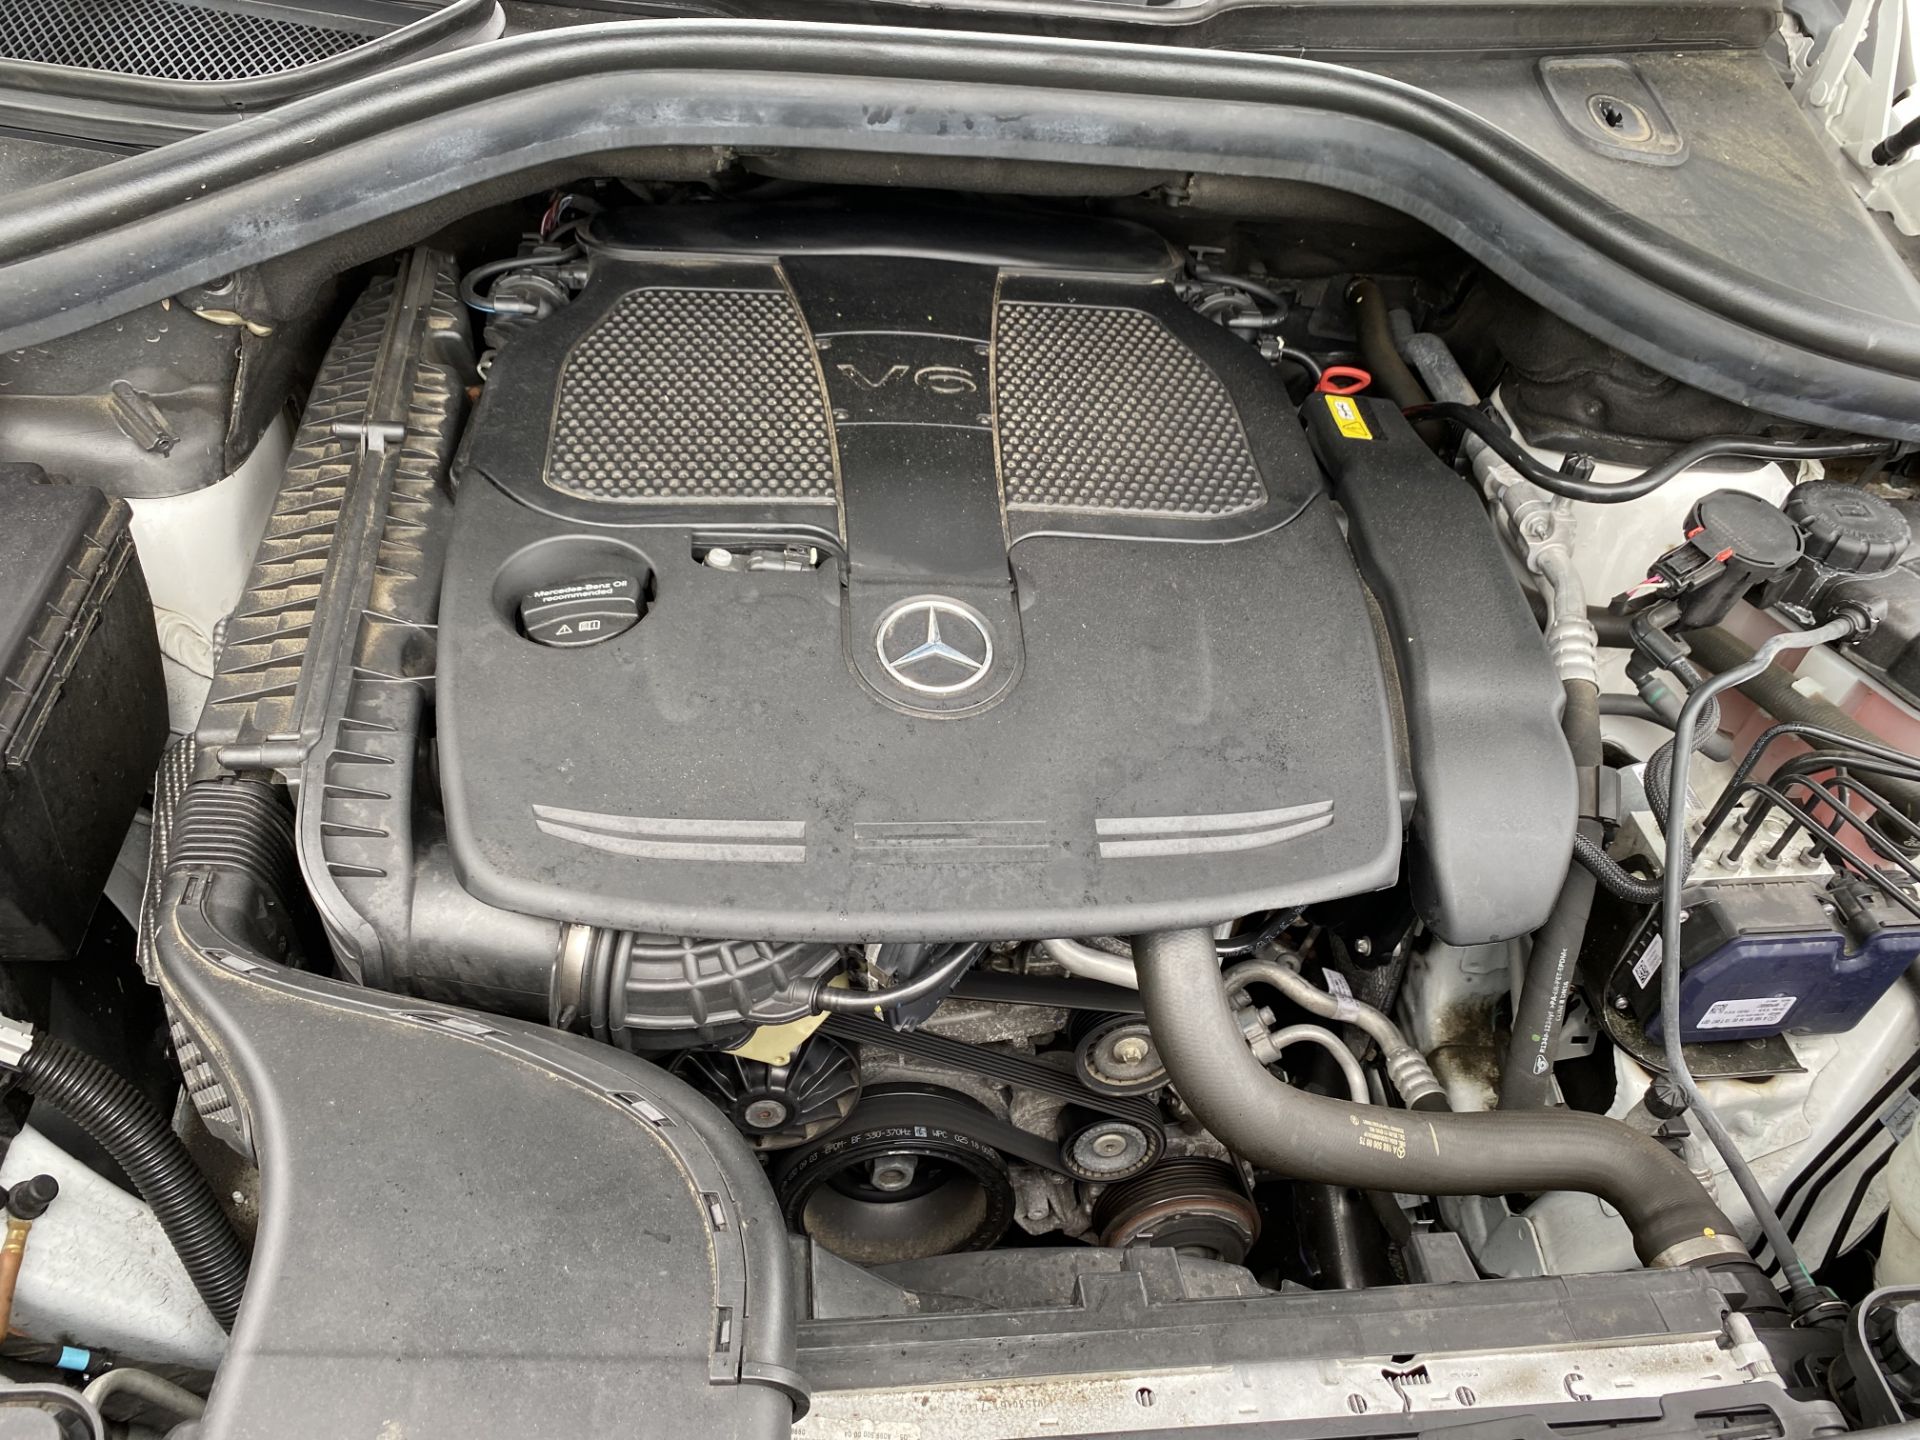 2018 Mercedes Benz GLE350, Odom: 52,420, VIN#: 4JGDA5HBXJB144786, Leather Interior, Power - Image 17 of 19